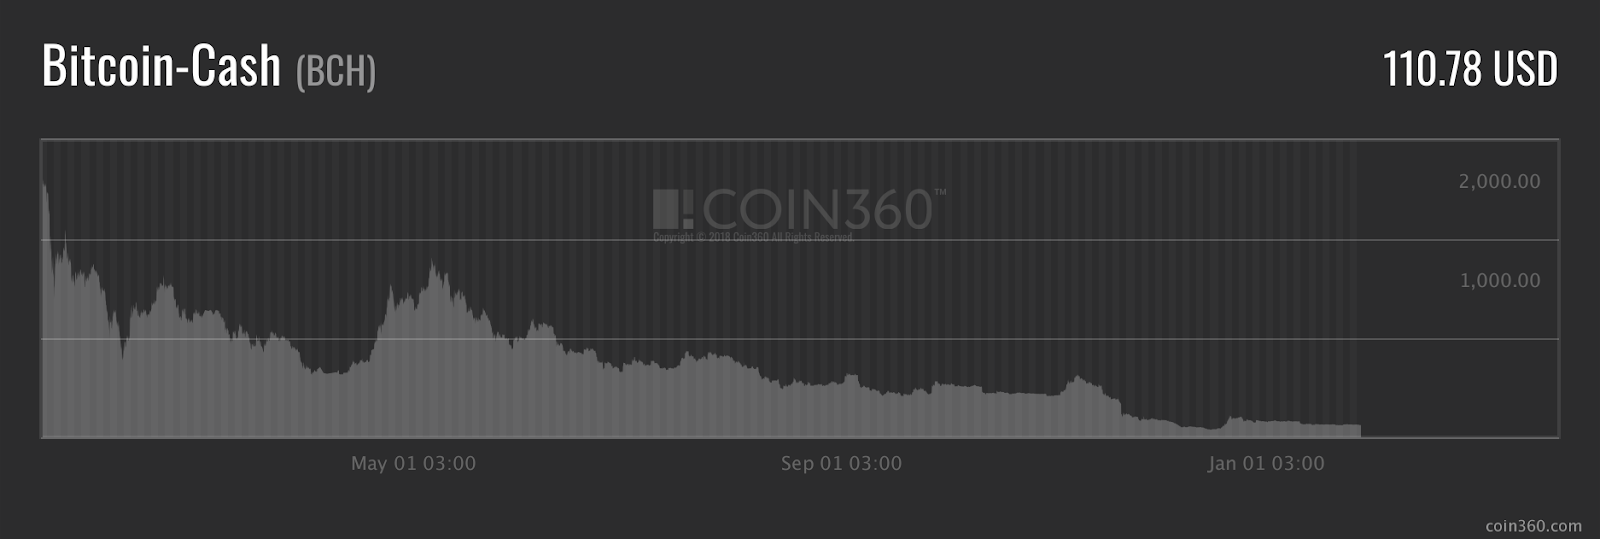 Bitcoin value prediction chart